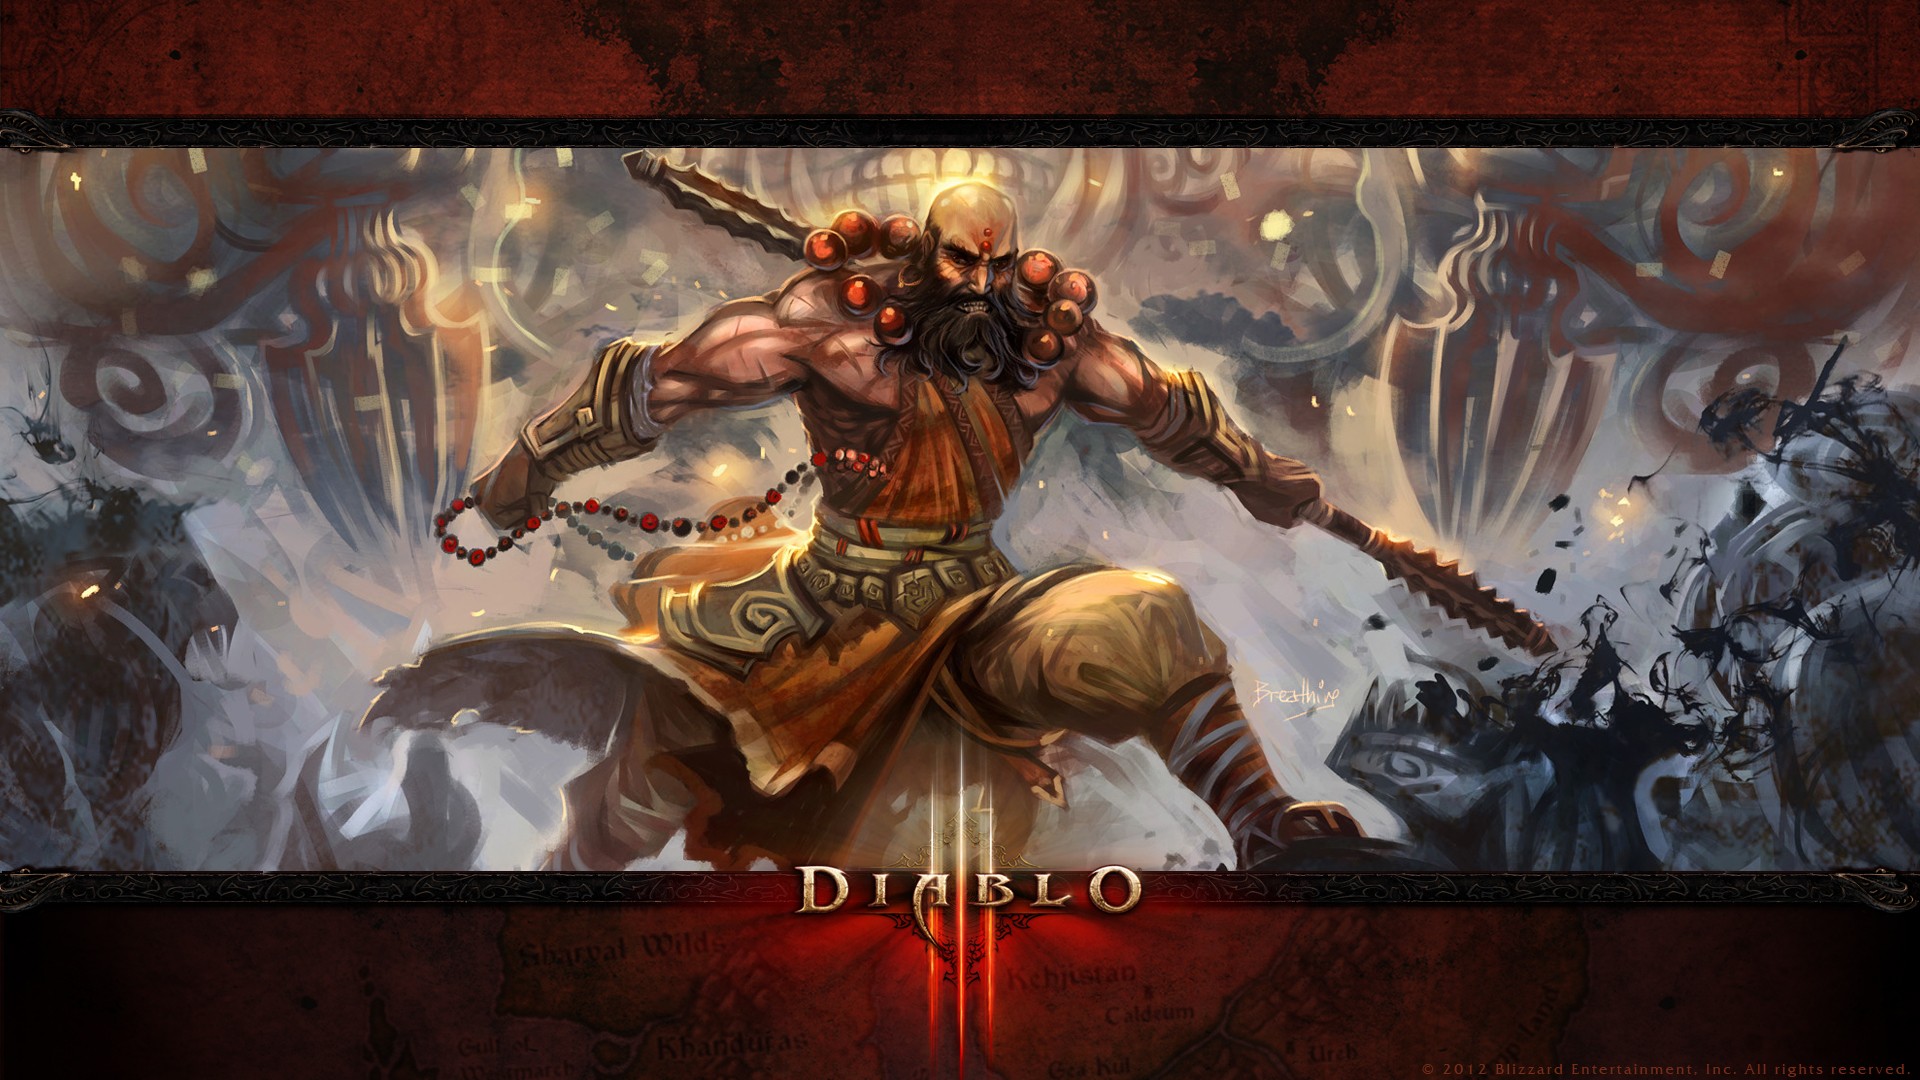 General 1920x1080 Blizzard Entertainment Diablo III Monk (Diablo) 2012 (Year) fantasy art fantasy men video games PC gaming video game men